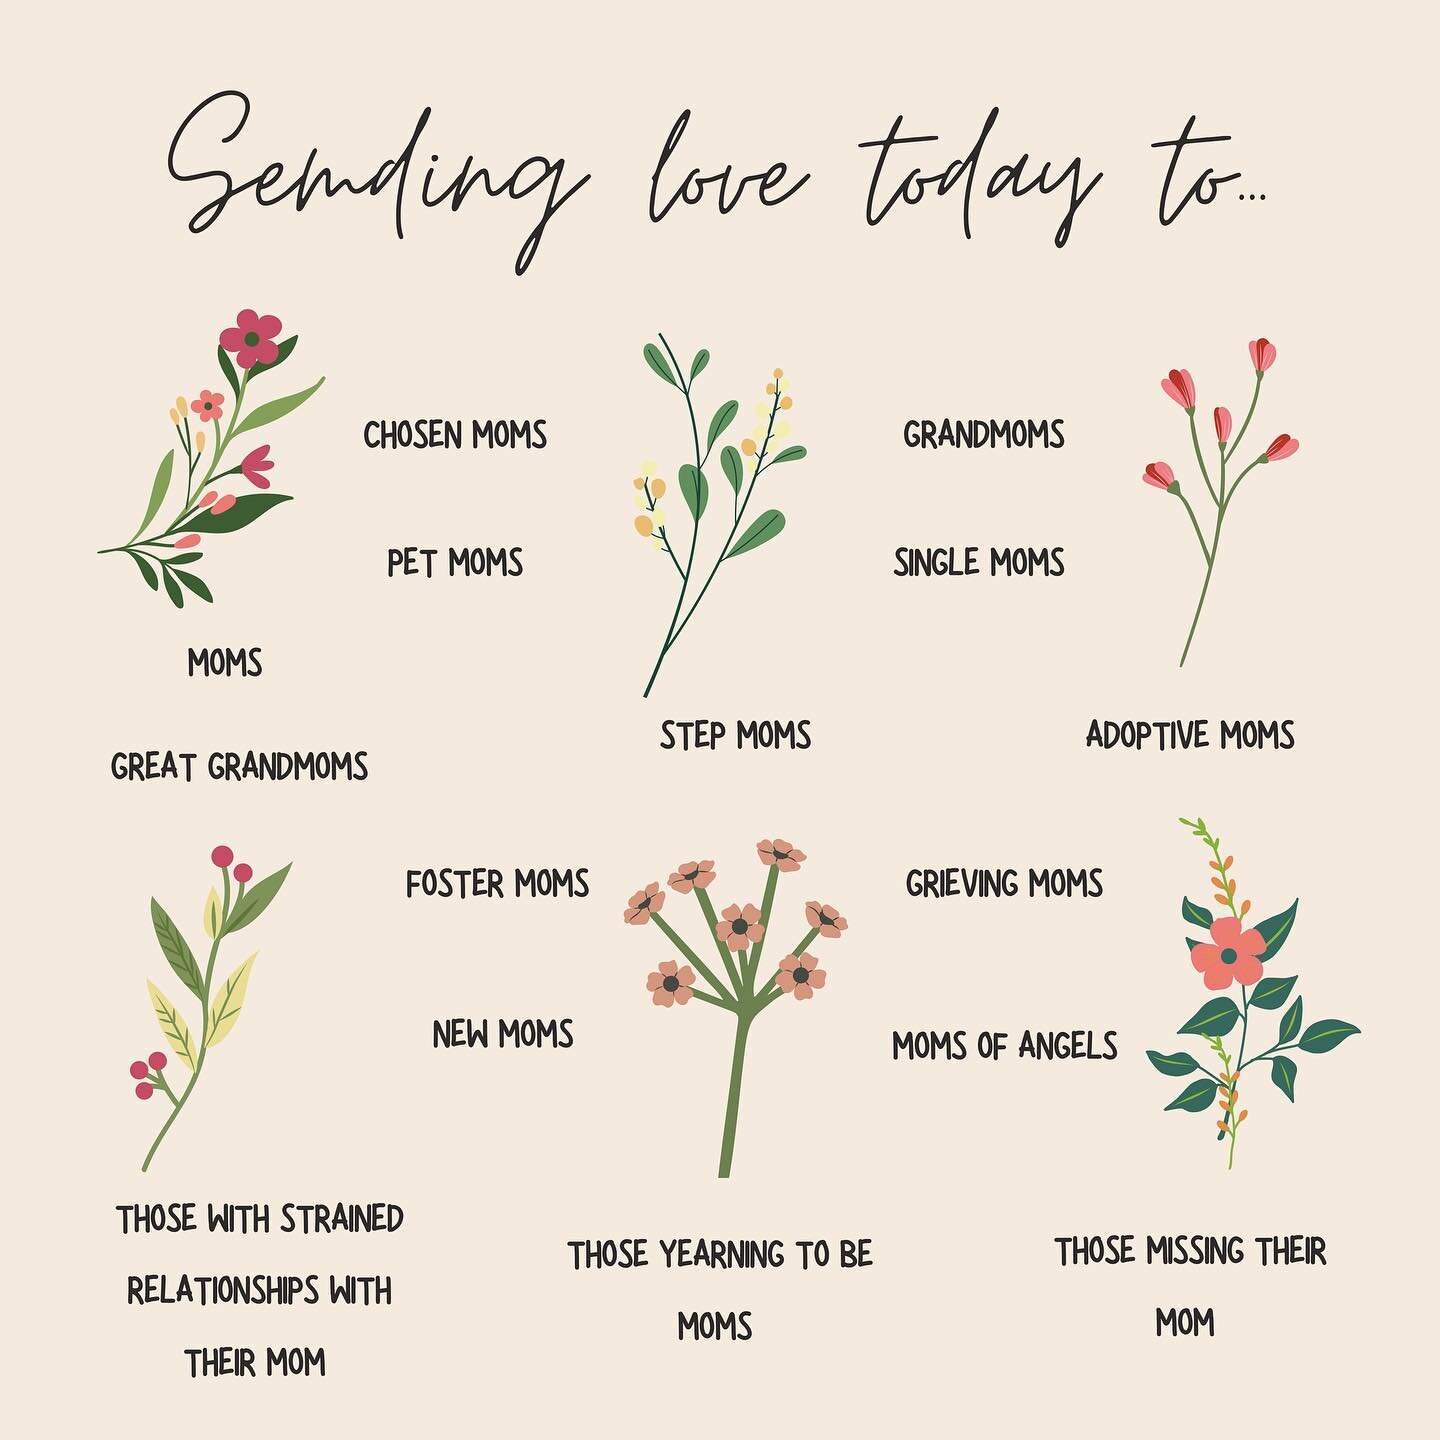 Sending love today ❤️